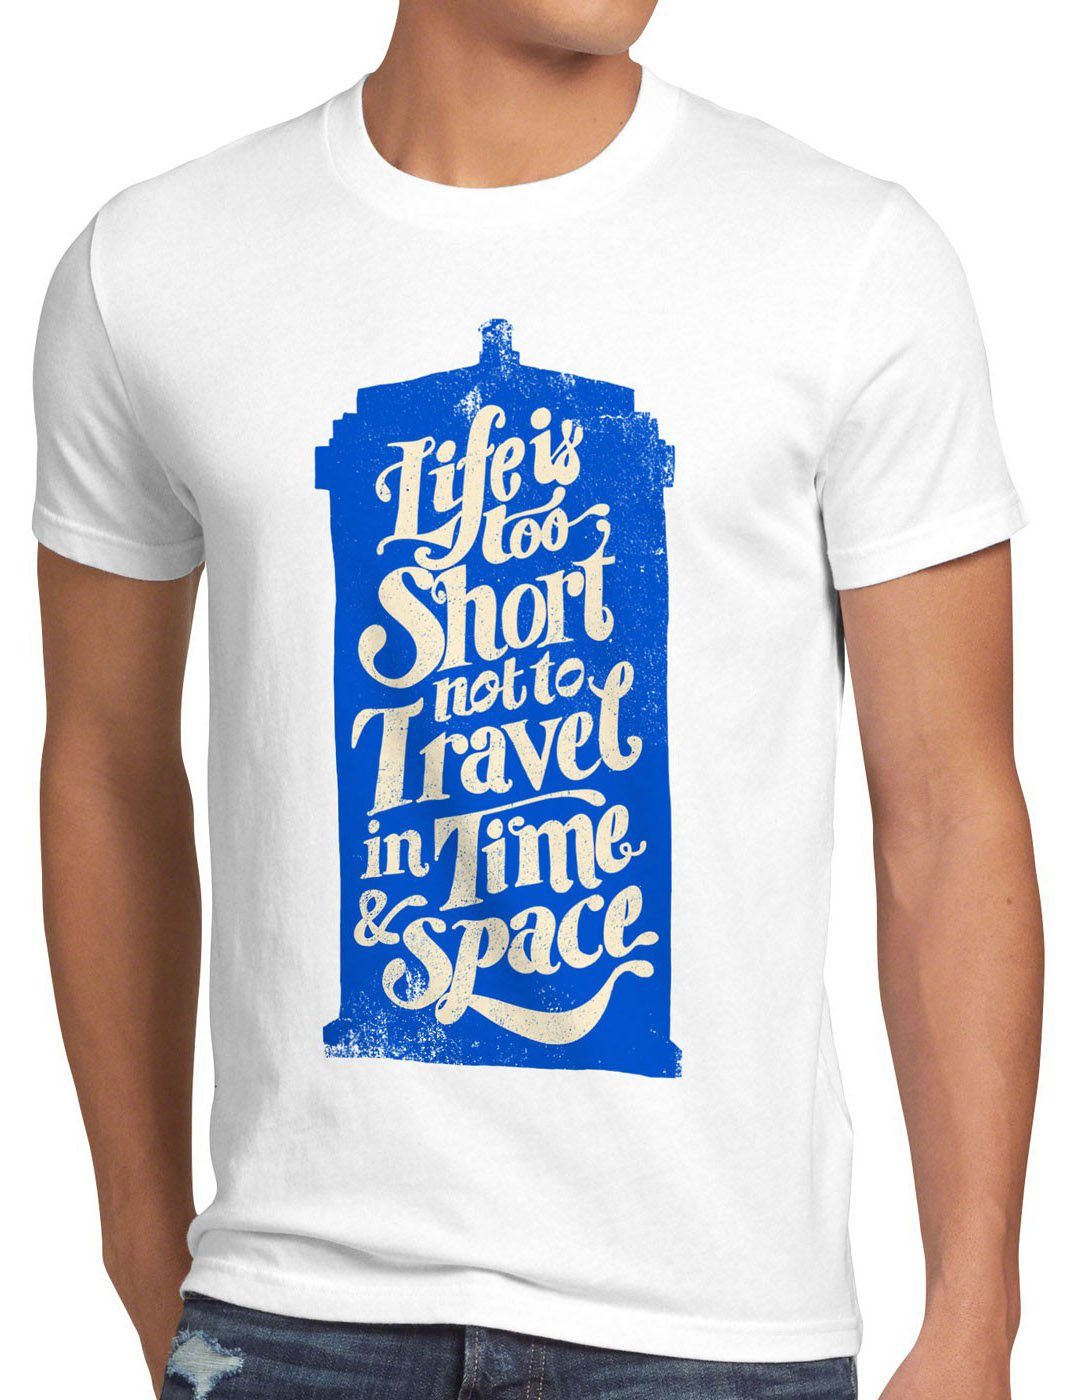 style3 Herren zeitreise box doktor police Doctor T-Shirt Print-Shirt uk dalek dr. who Time weiß tardis